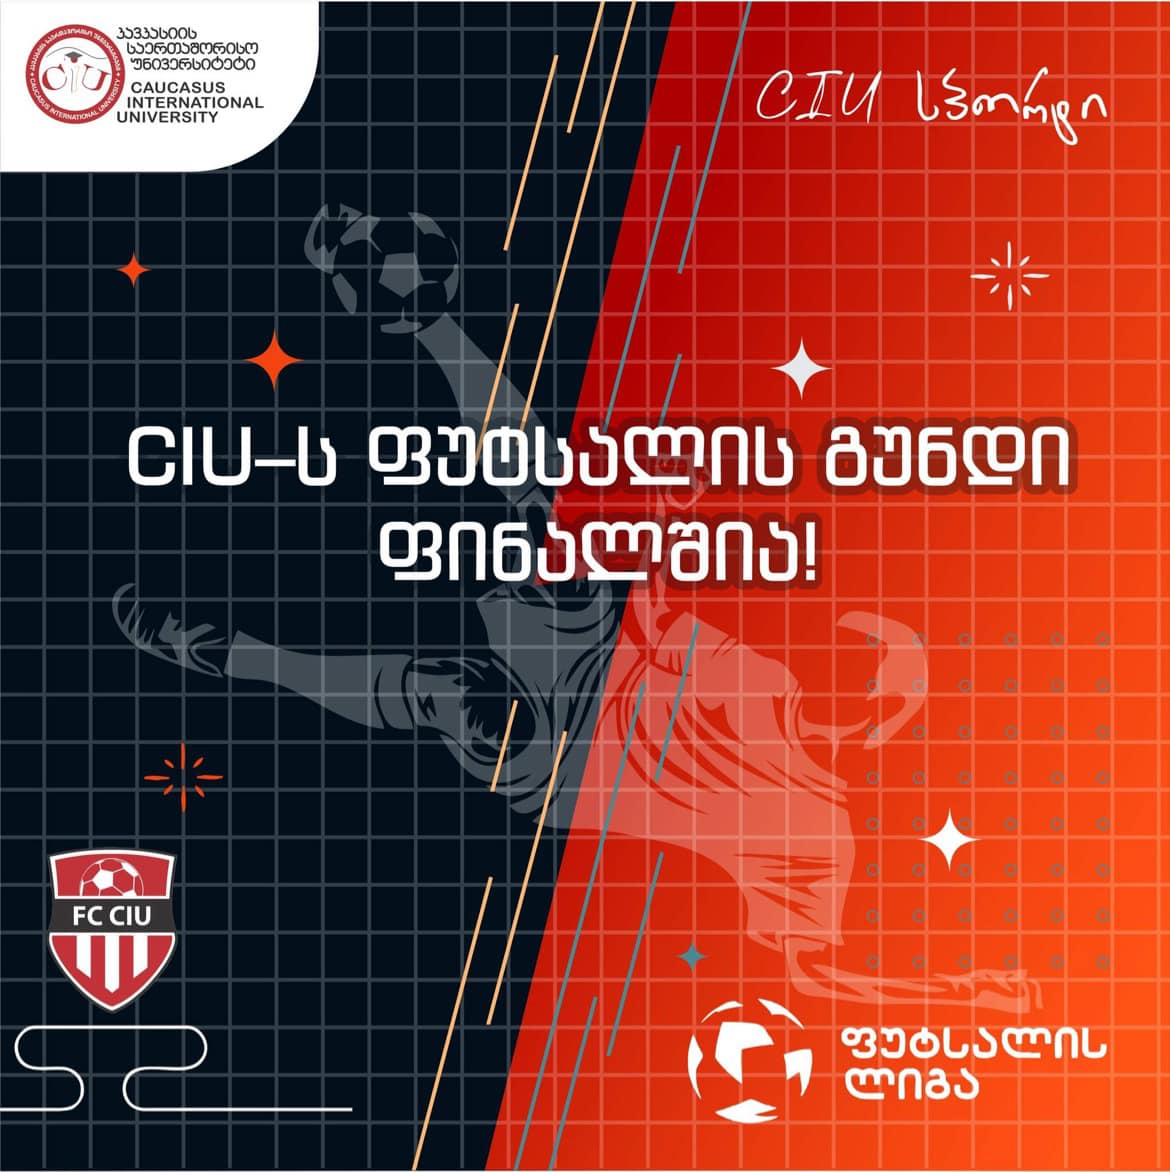 CIU Futsal Team is in the Final of the Georgian Futsal League